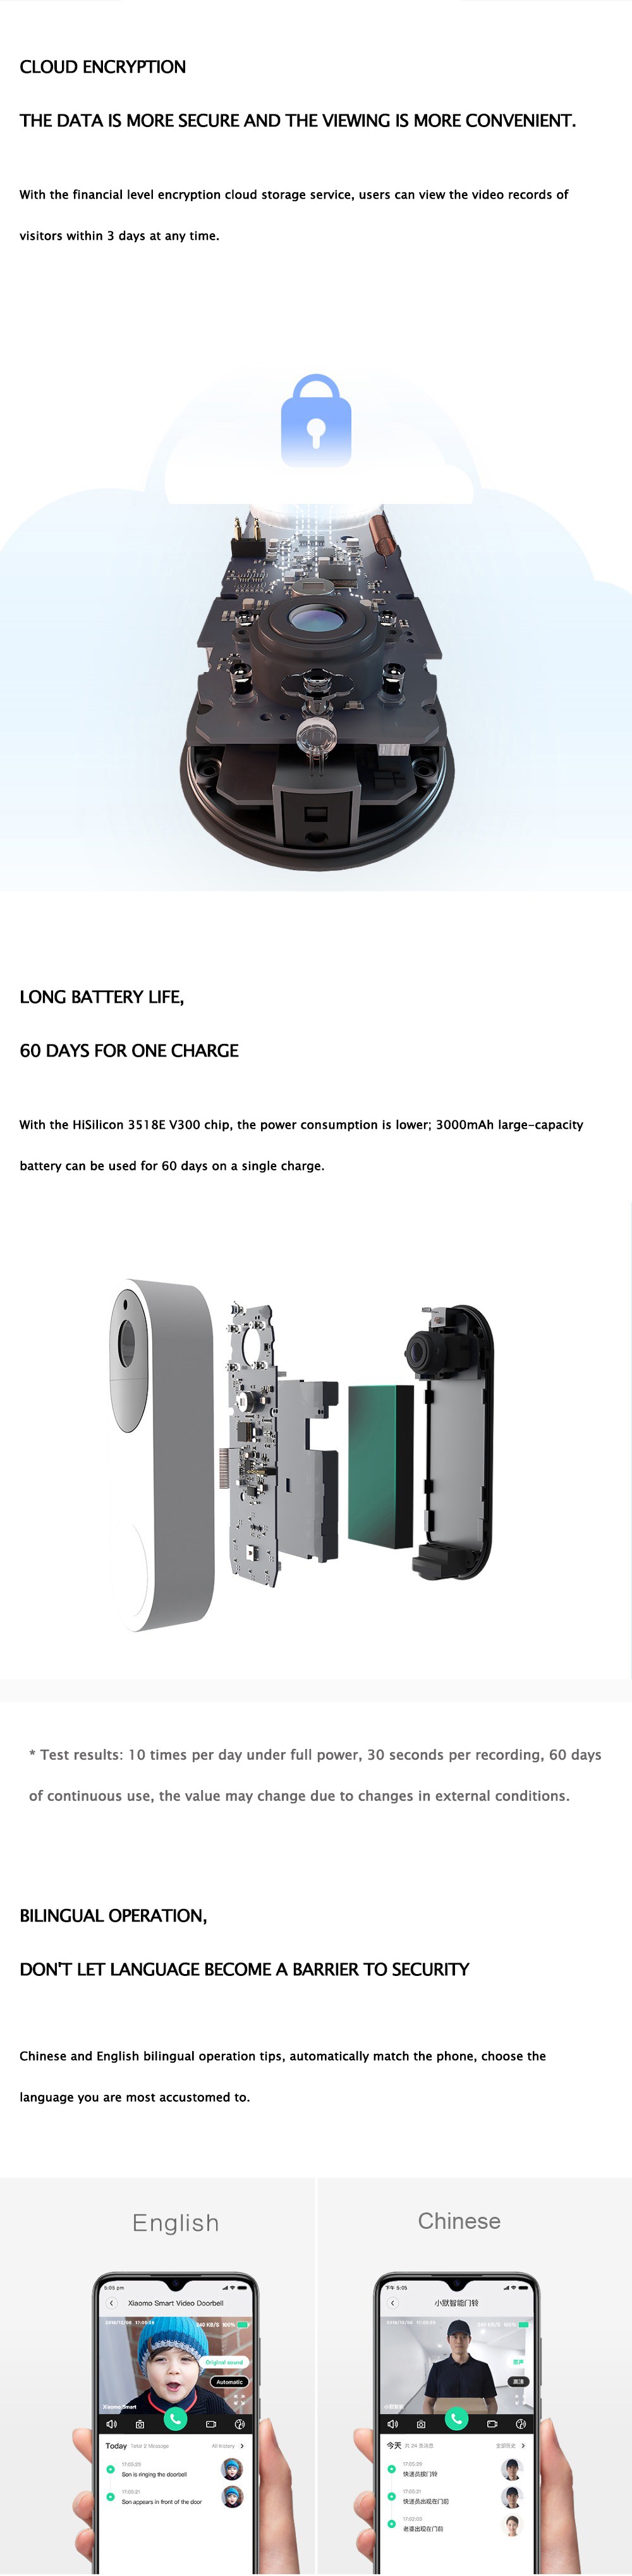 Xiaomo MDB11 AI Face Identifcation 1080P IR Night Vision WiFi Smart Video Doorbell - White KIT